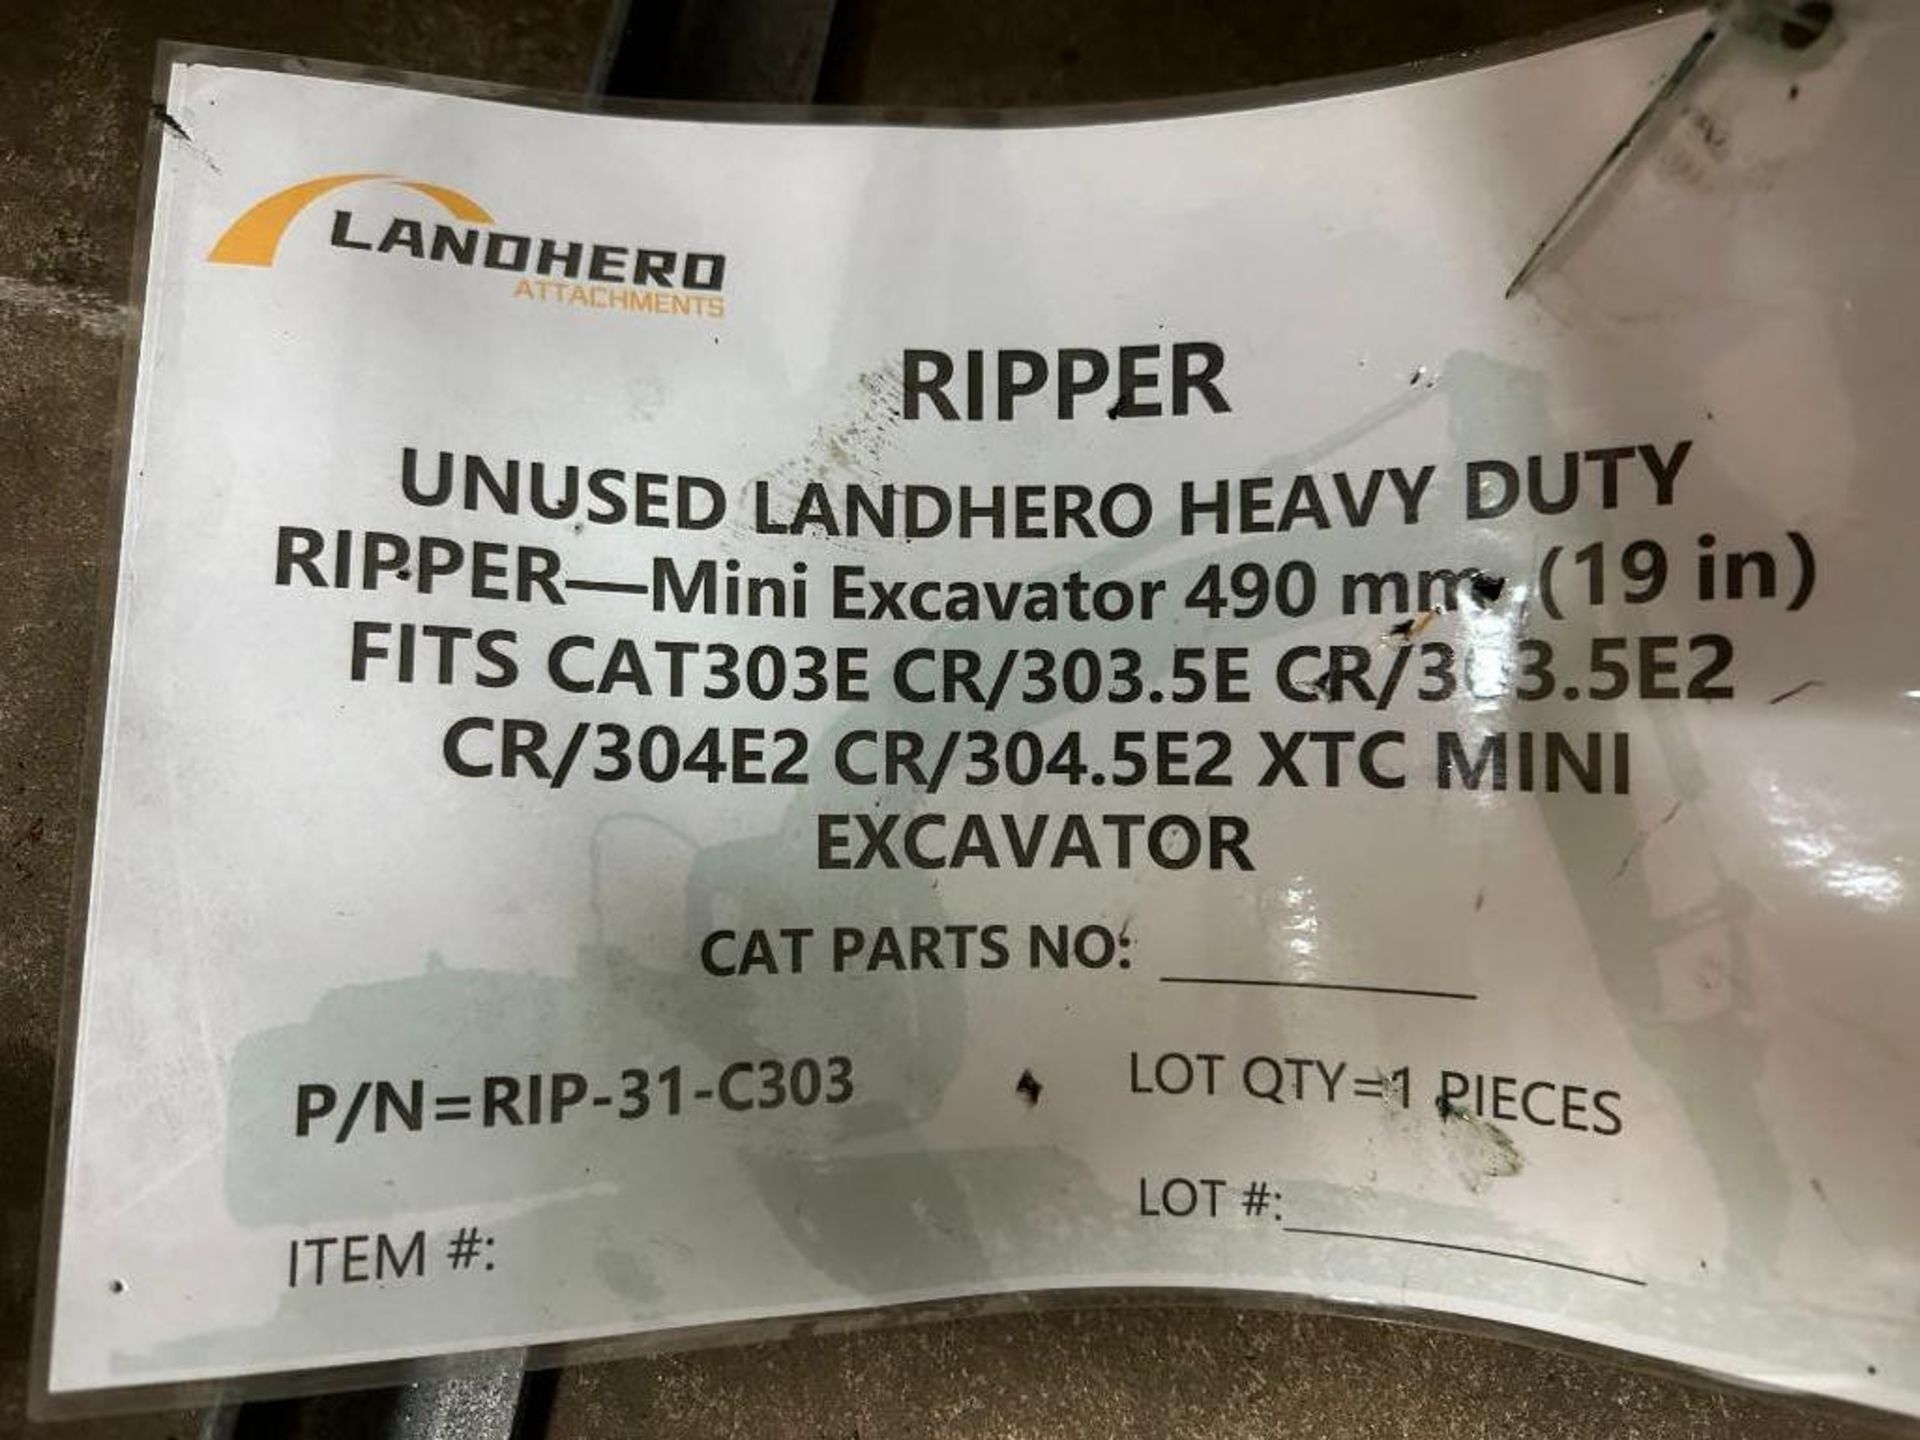 LAND HONOR 19" HEAVY DUTY RIPPER MINI EXCAVATOR ATTACHMENT BRAND/MODEL: LANDHONER RIP-31-C307/308 IN - Image 6 of 6